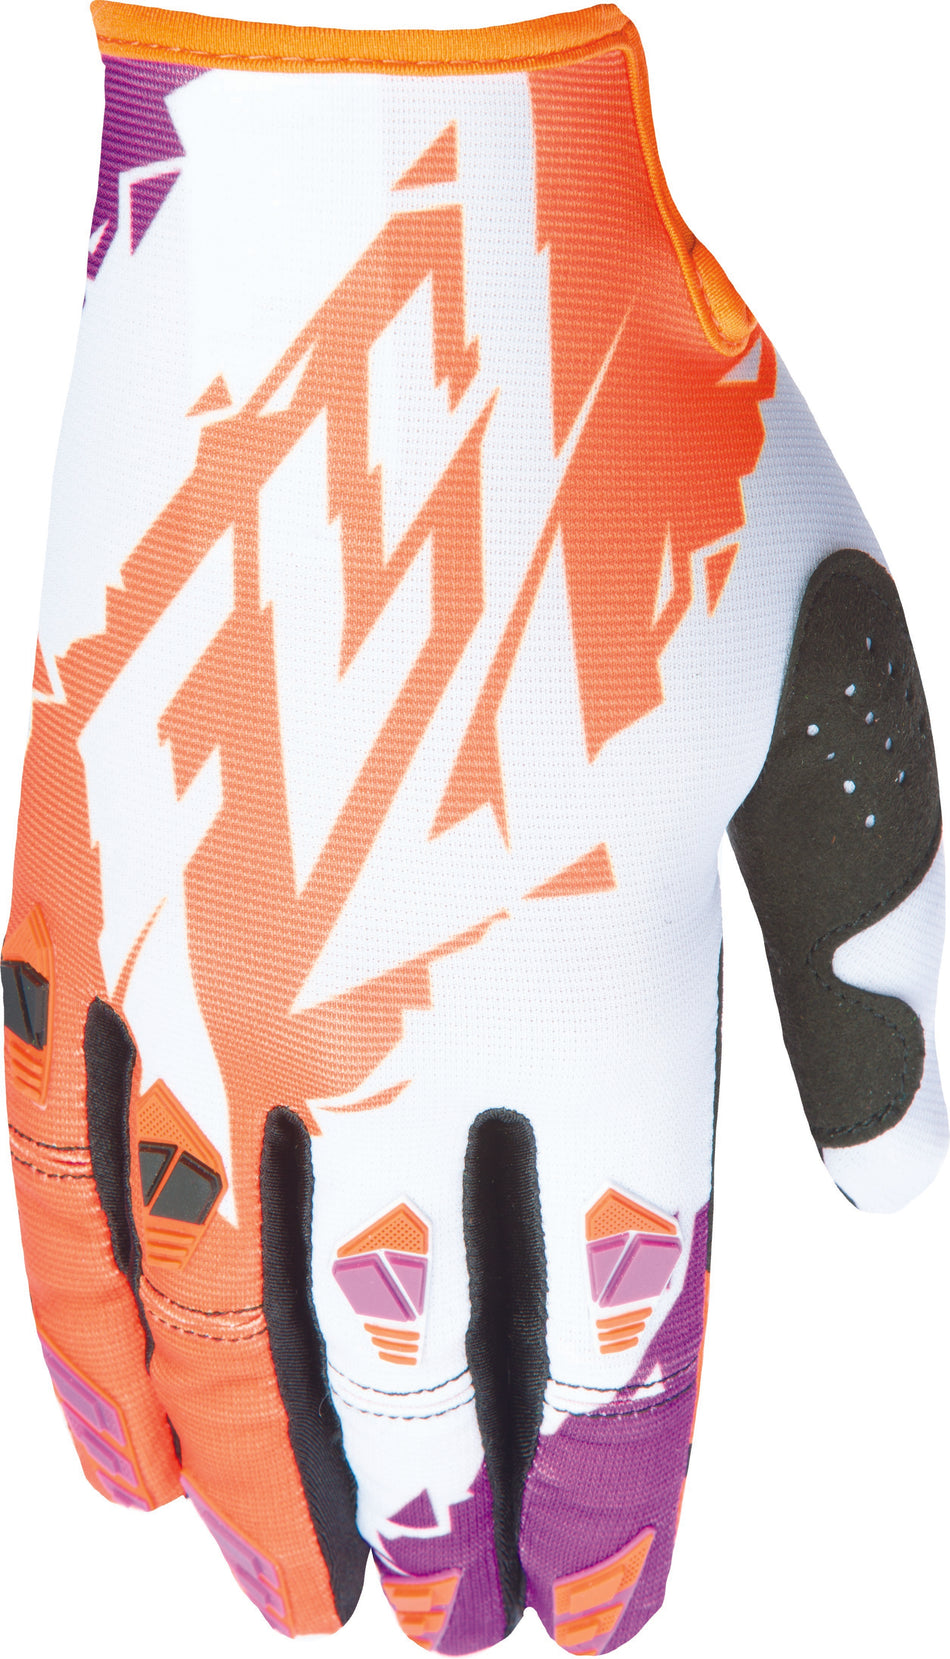 FLY RACING Kinetic Crux Gloves Orange/Purple Sz 5 370-41705